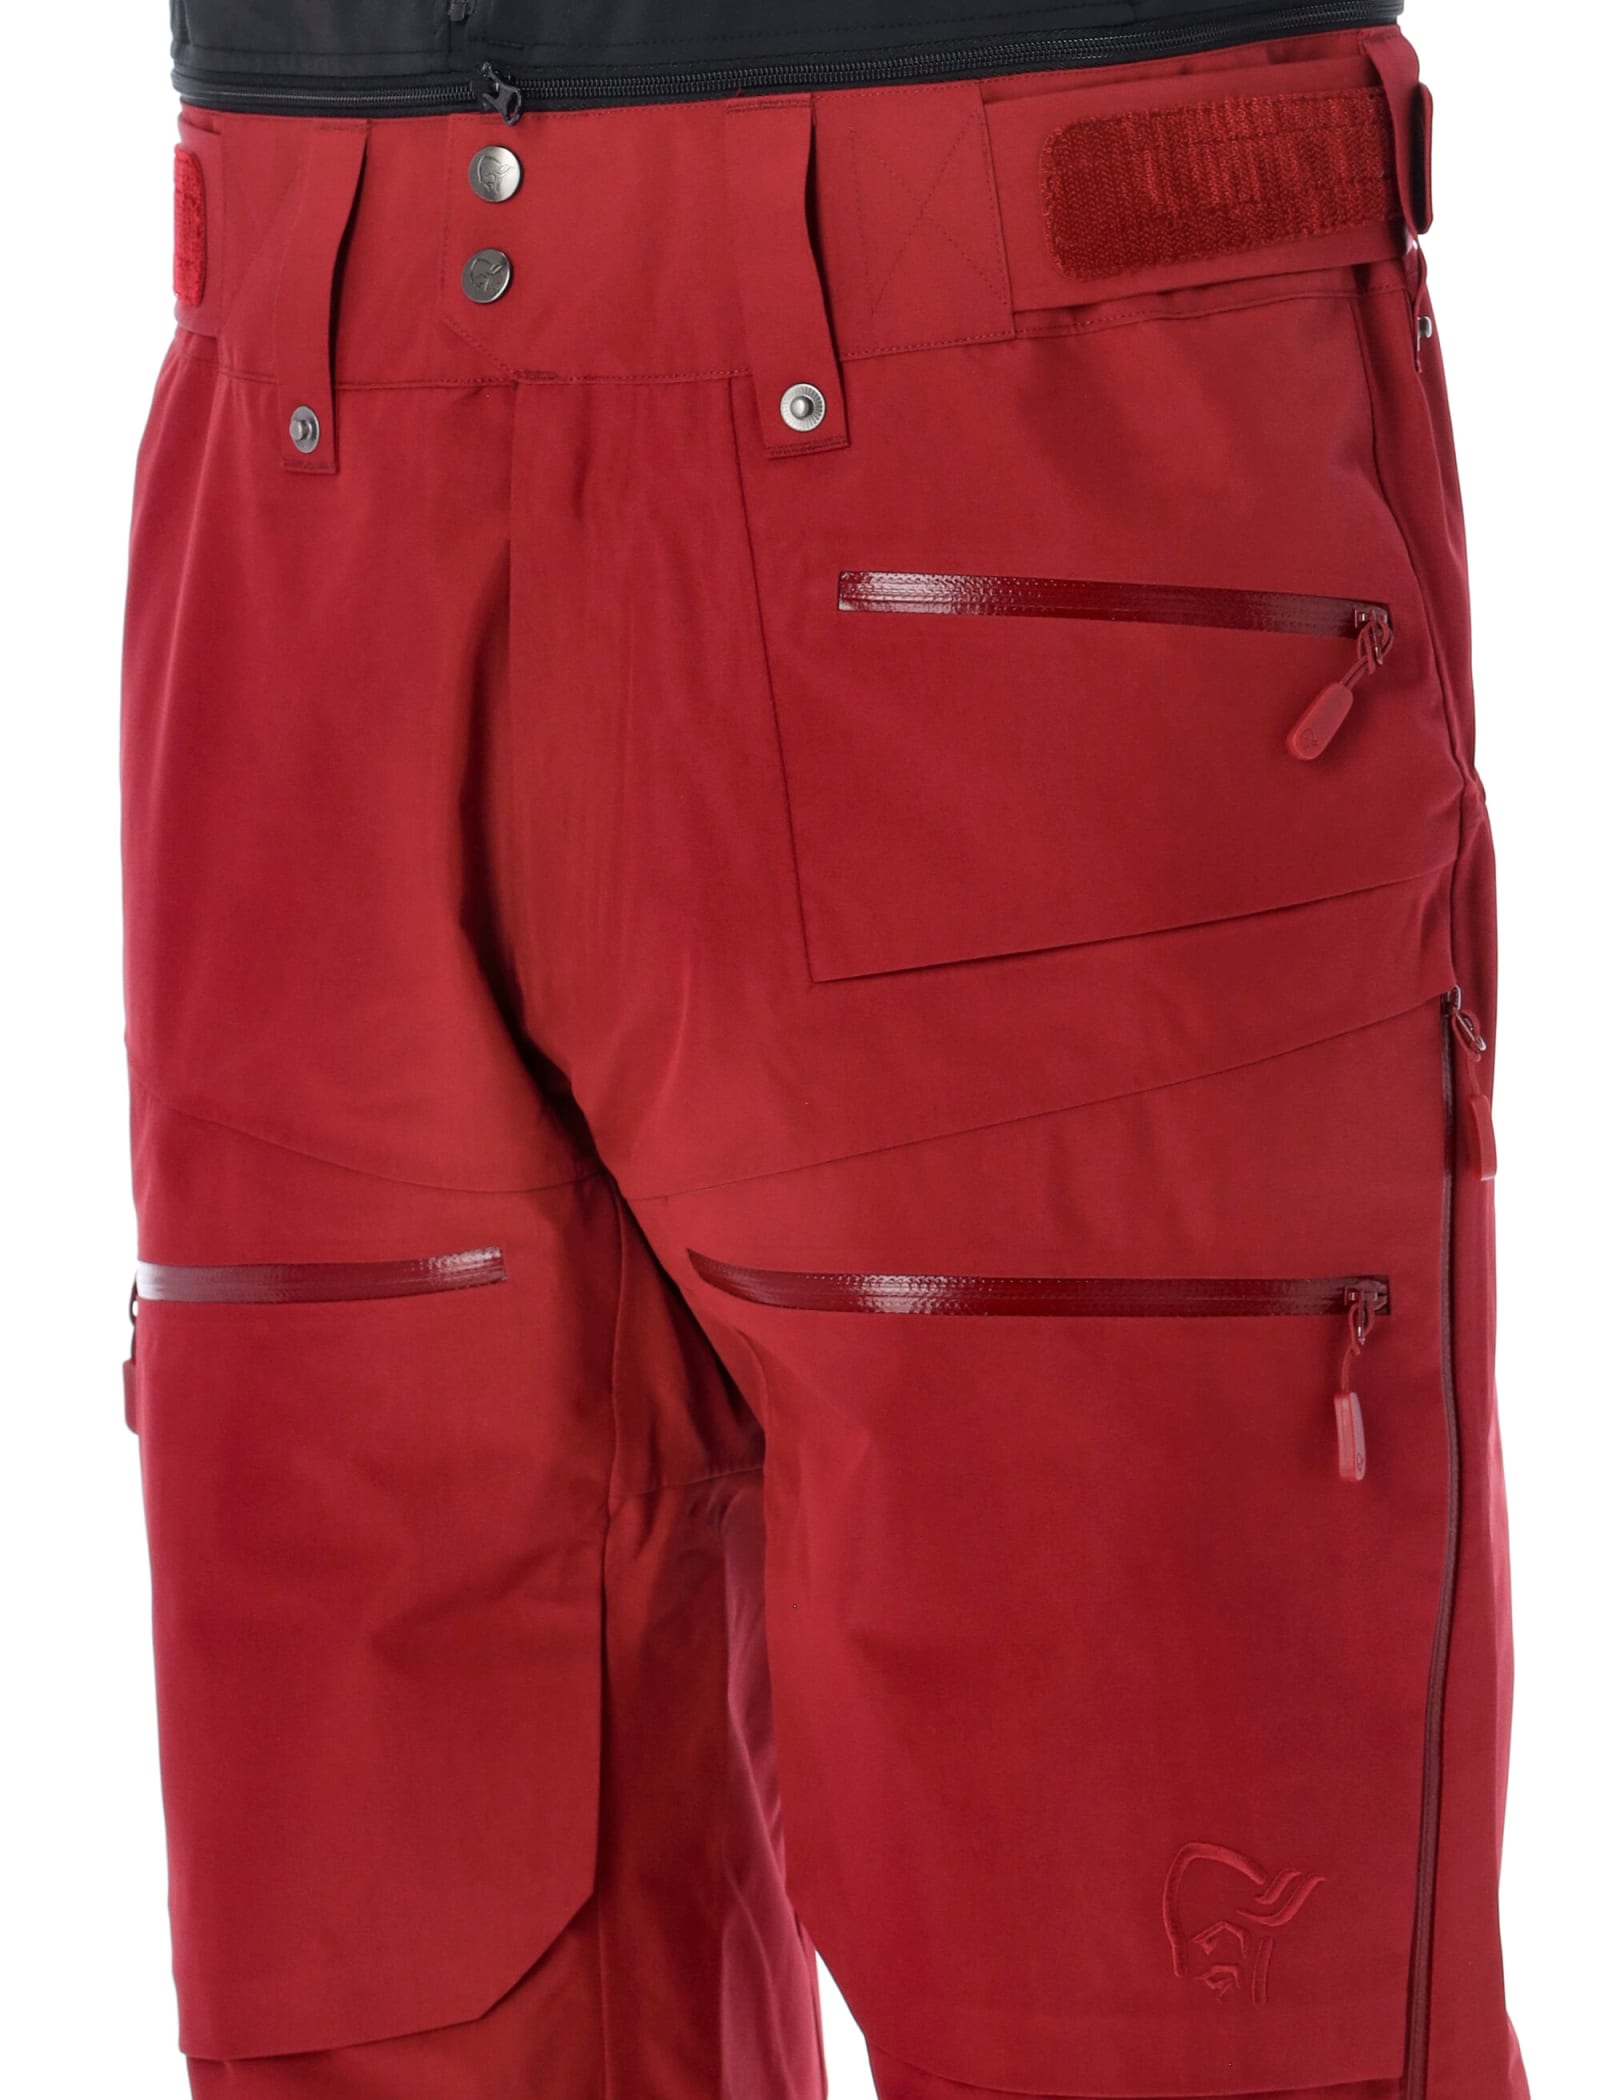 Norrona Lofoten GORE-TEX Insulated Pants - Women's